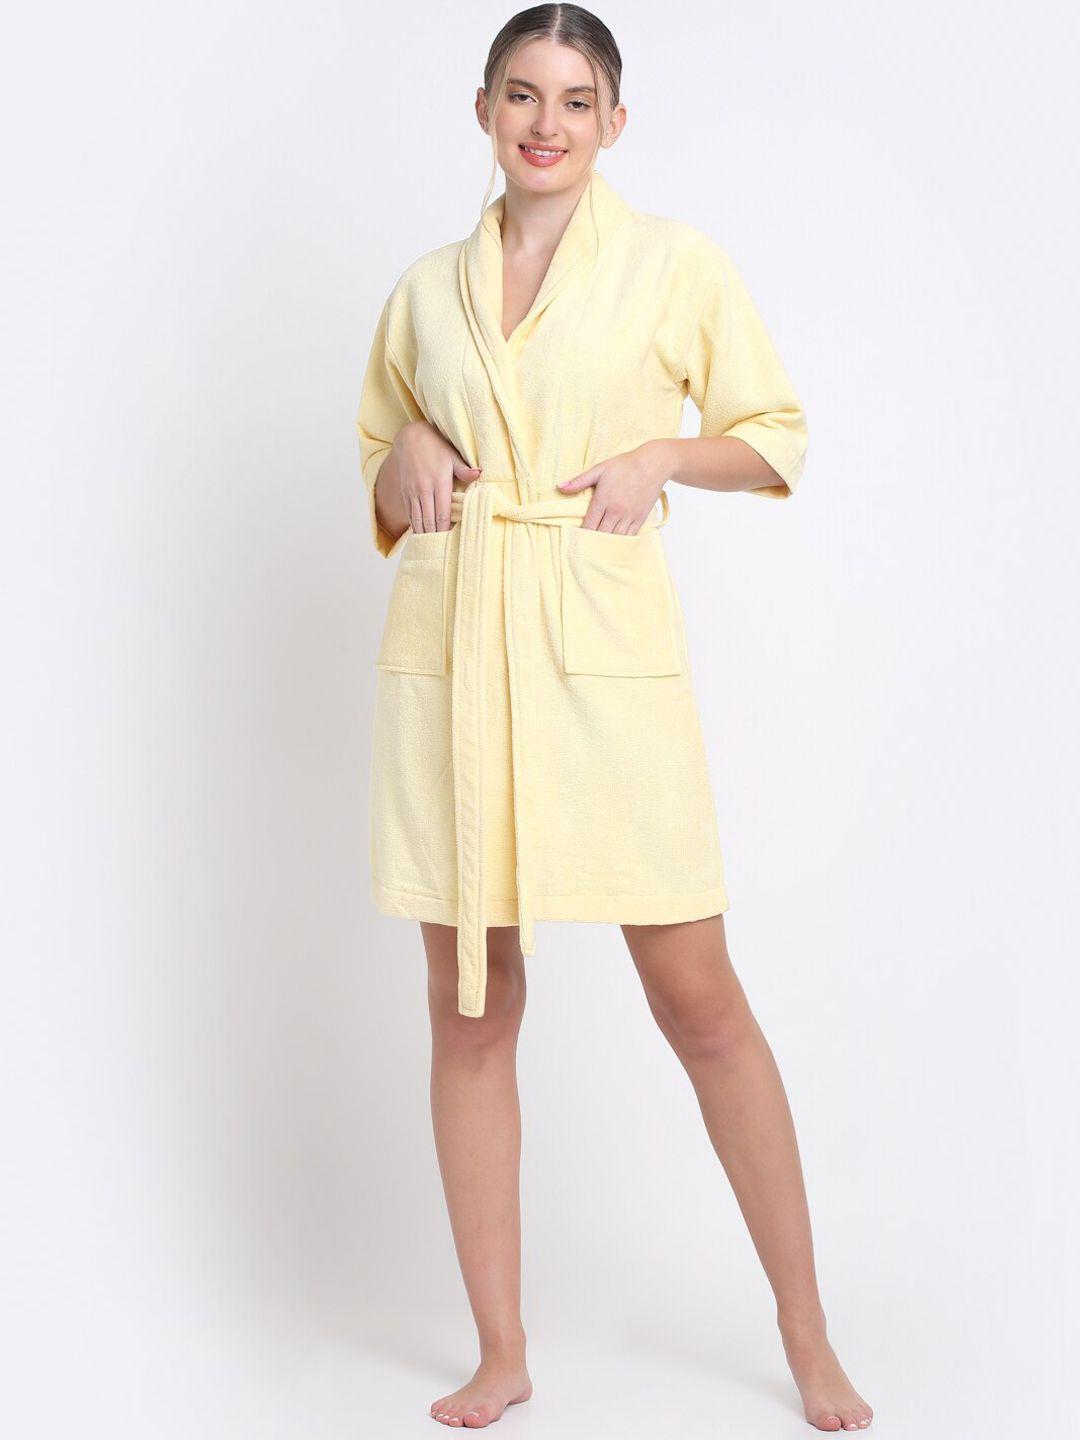 creeva women luxury highly absorbent bath robe